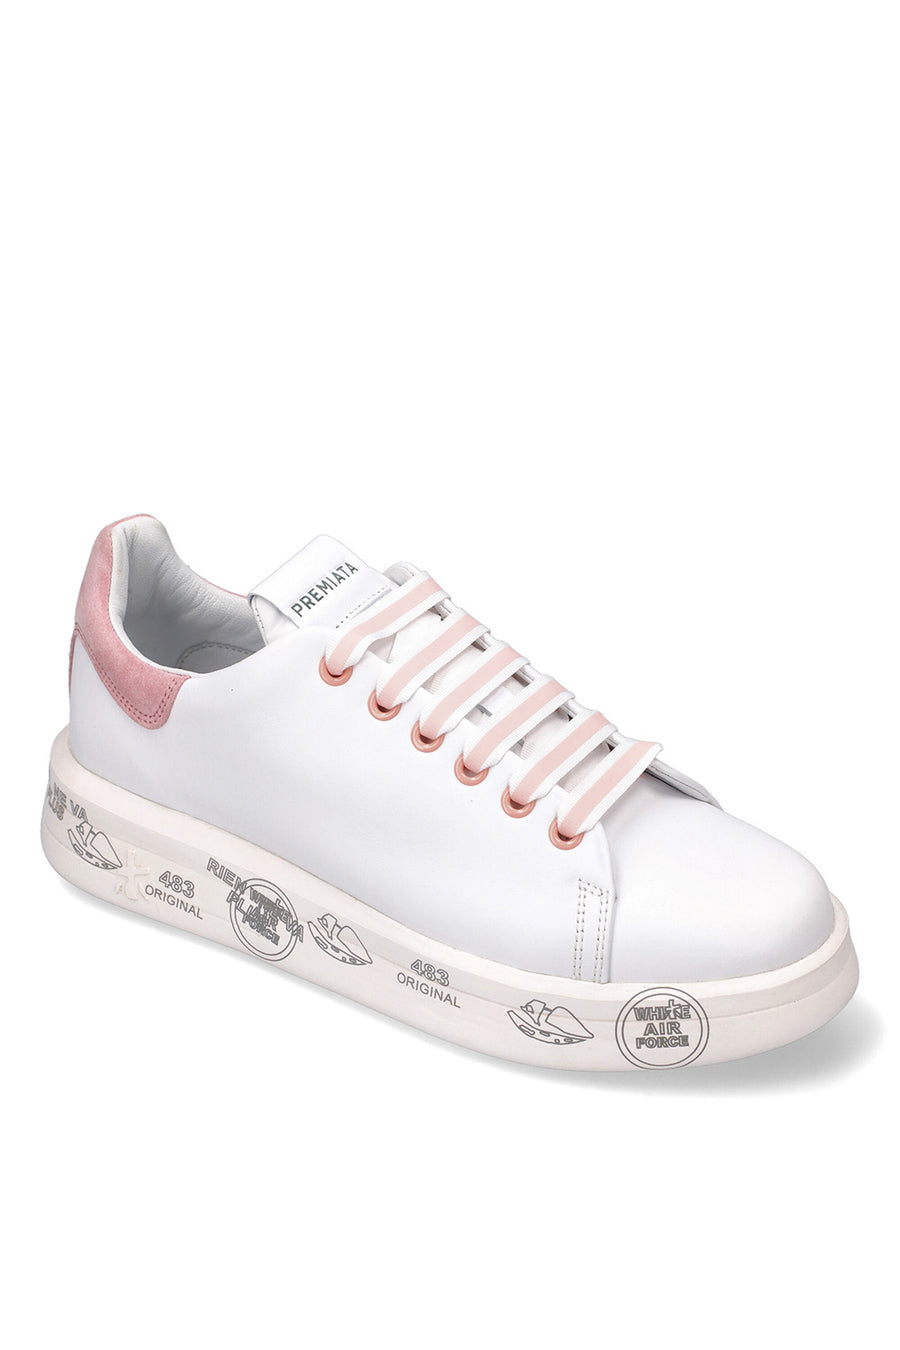 Sneakers Premiata in pelle bianca e rosa belle5714